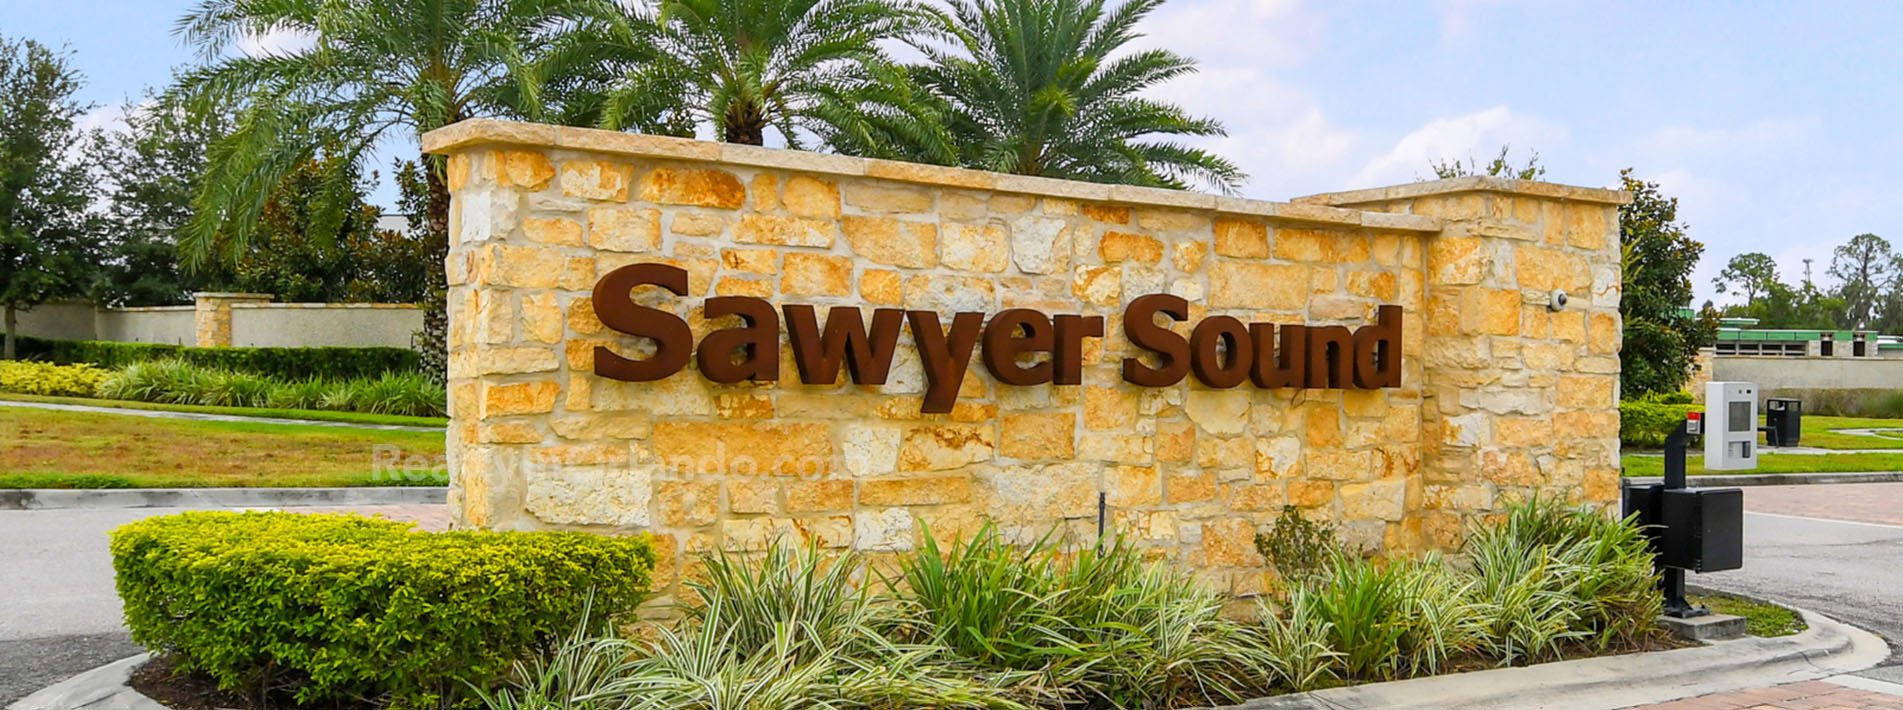 Sawyer Sound FL Real Estate